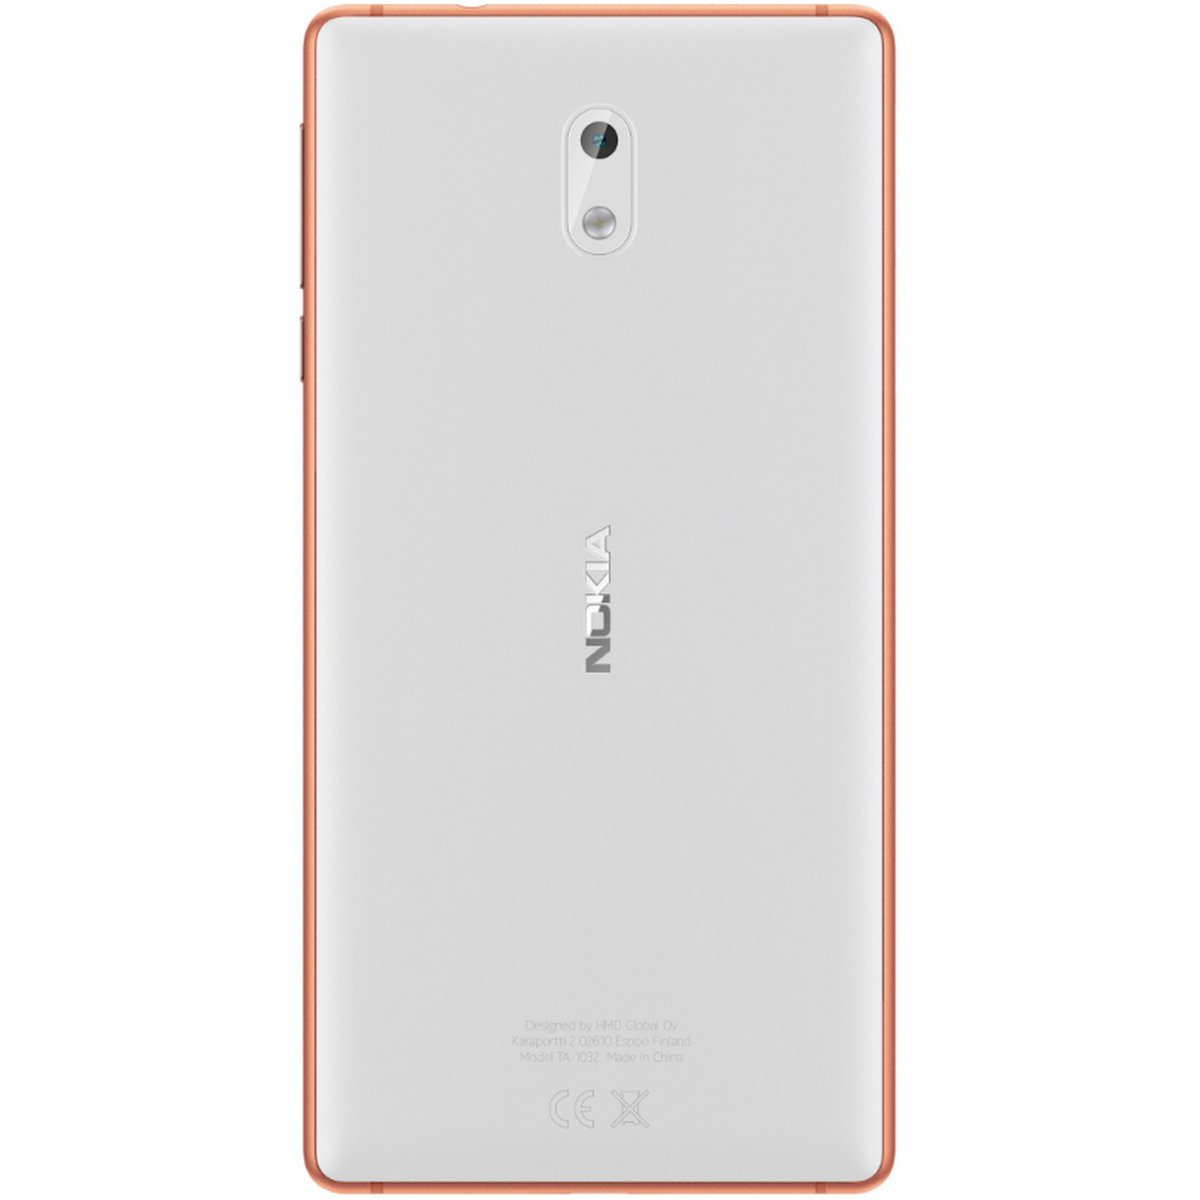 Nokia 3 16GB Copper White